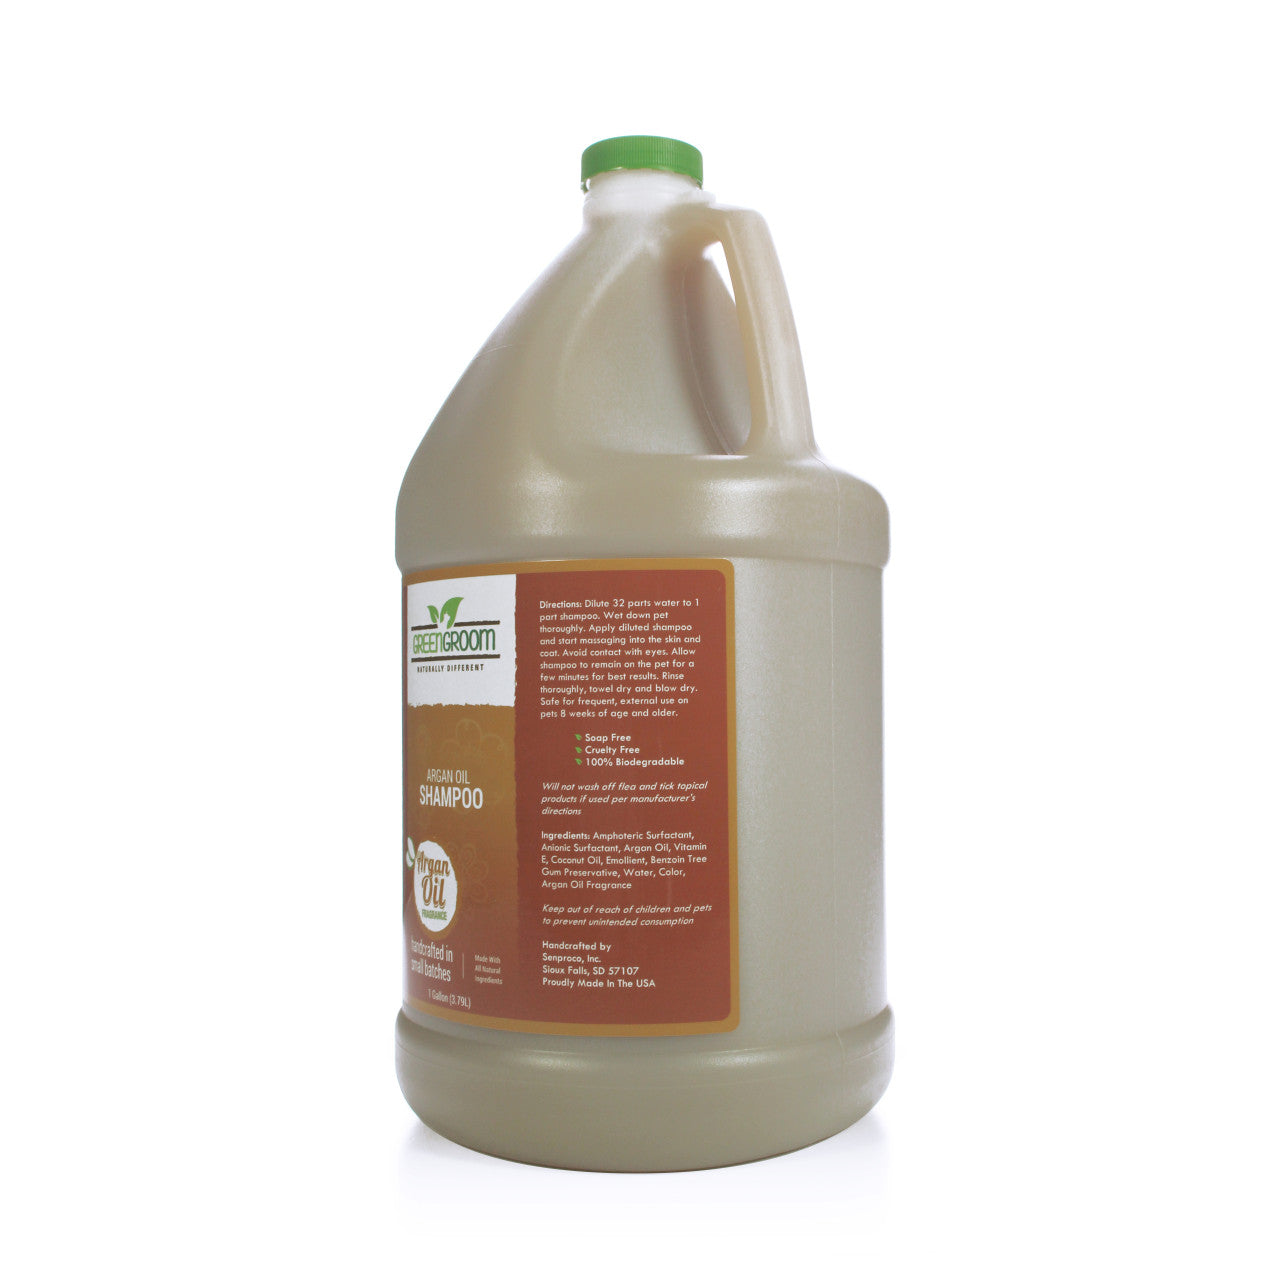 Green Groom Argan Oil Dog Shampoo, 1 Gallon-Shampoo & Conditioner-Pet's Choice Supply